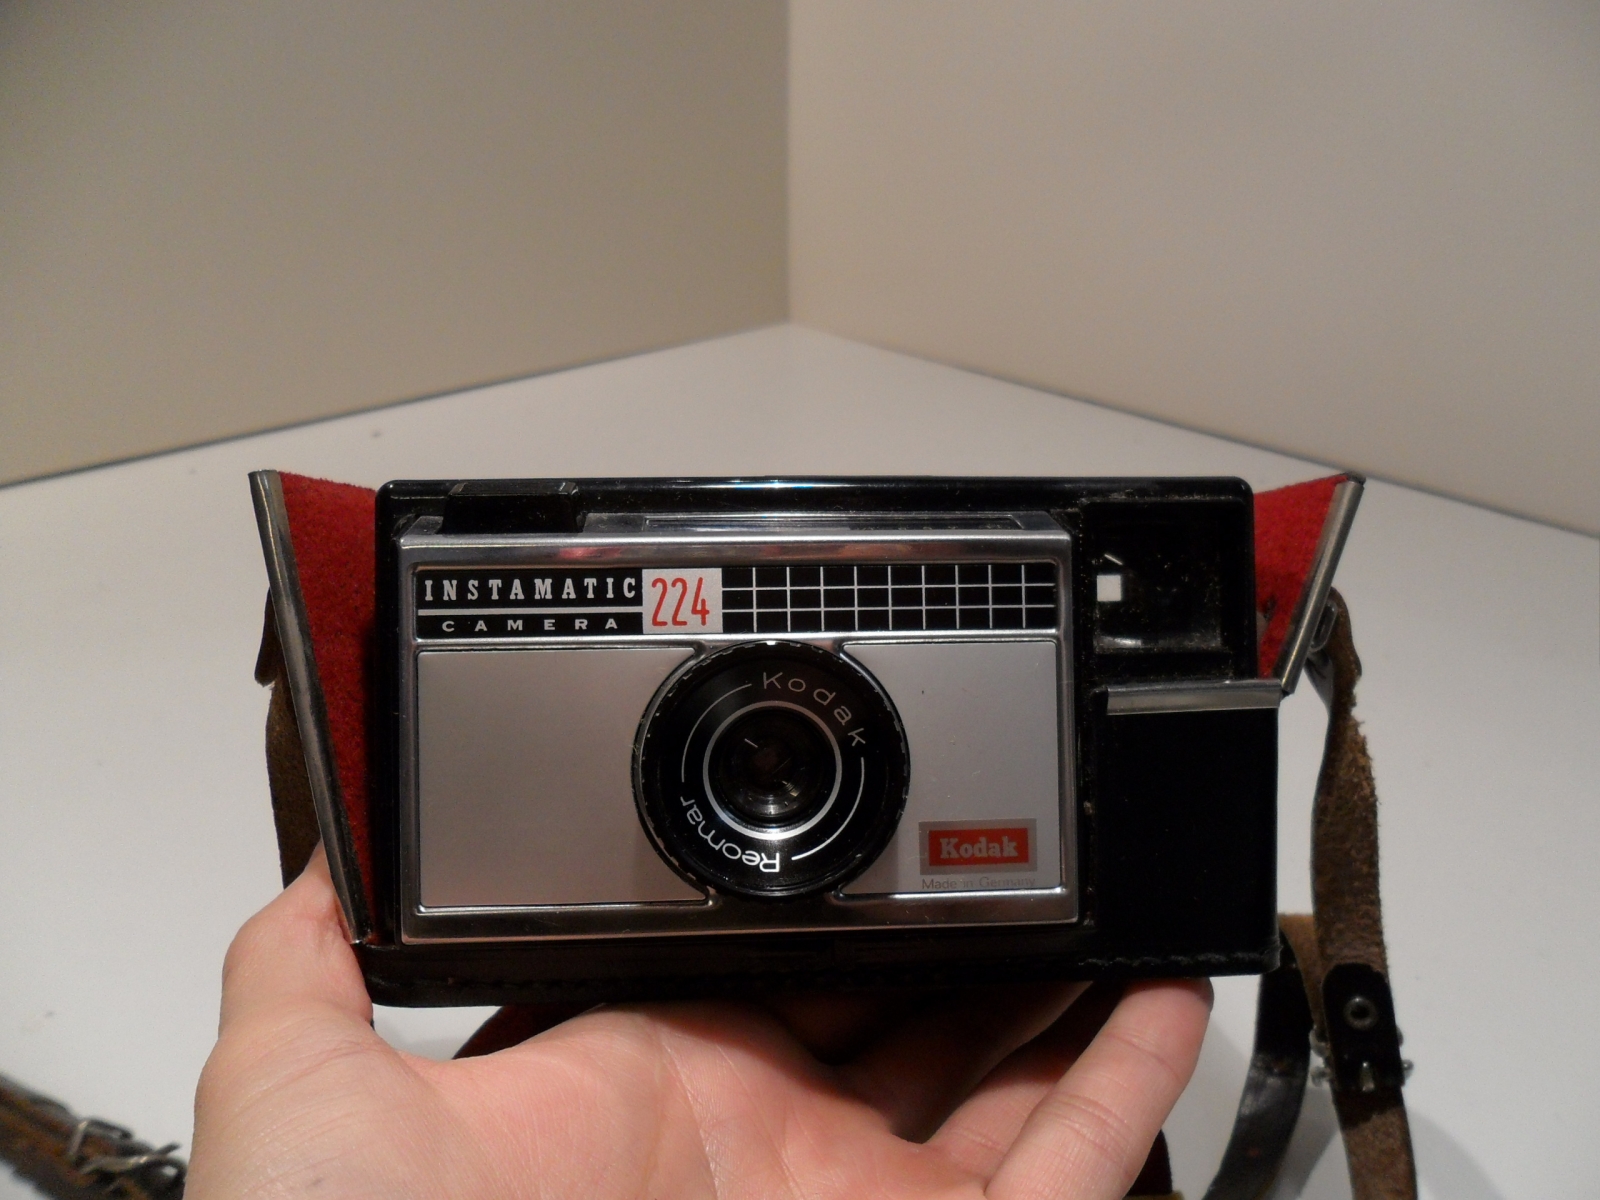 Kodak macchina fotografica 2